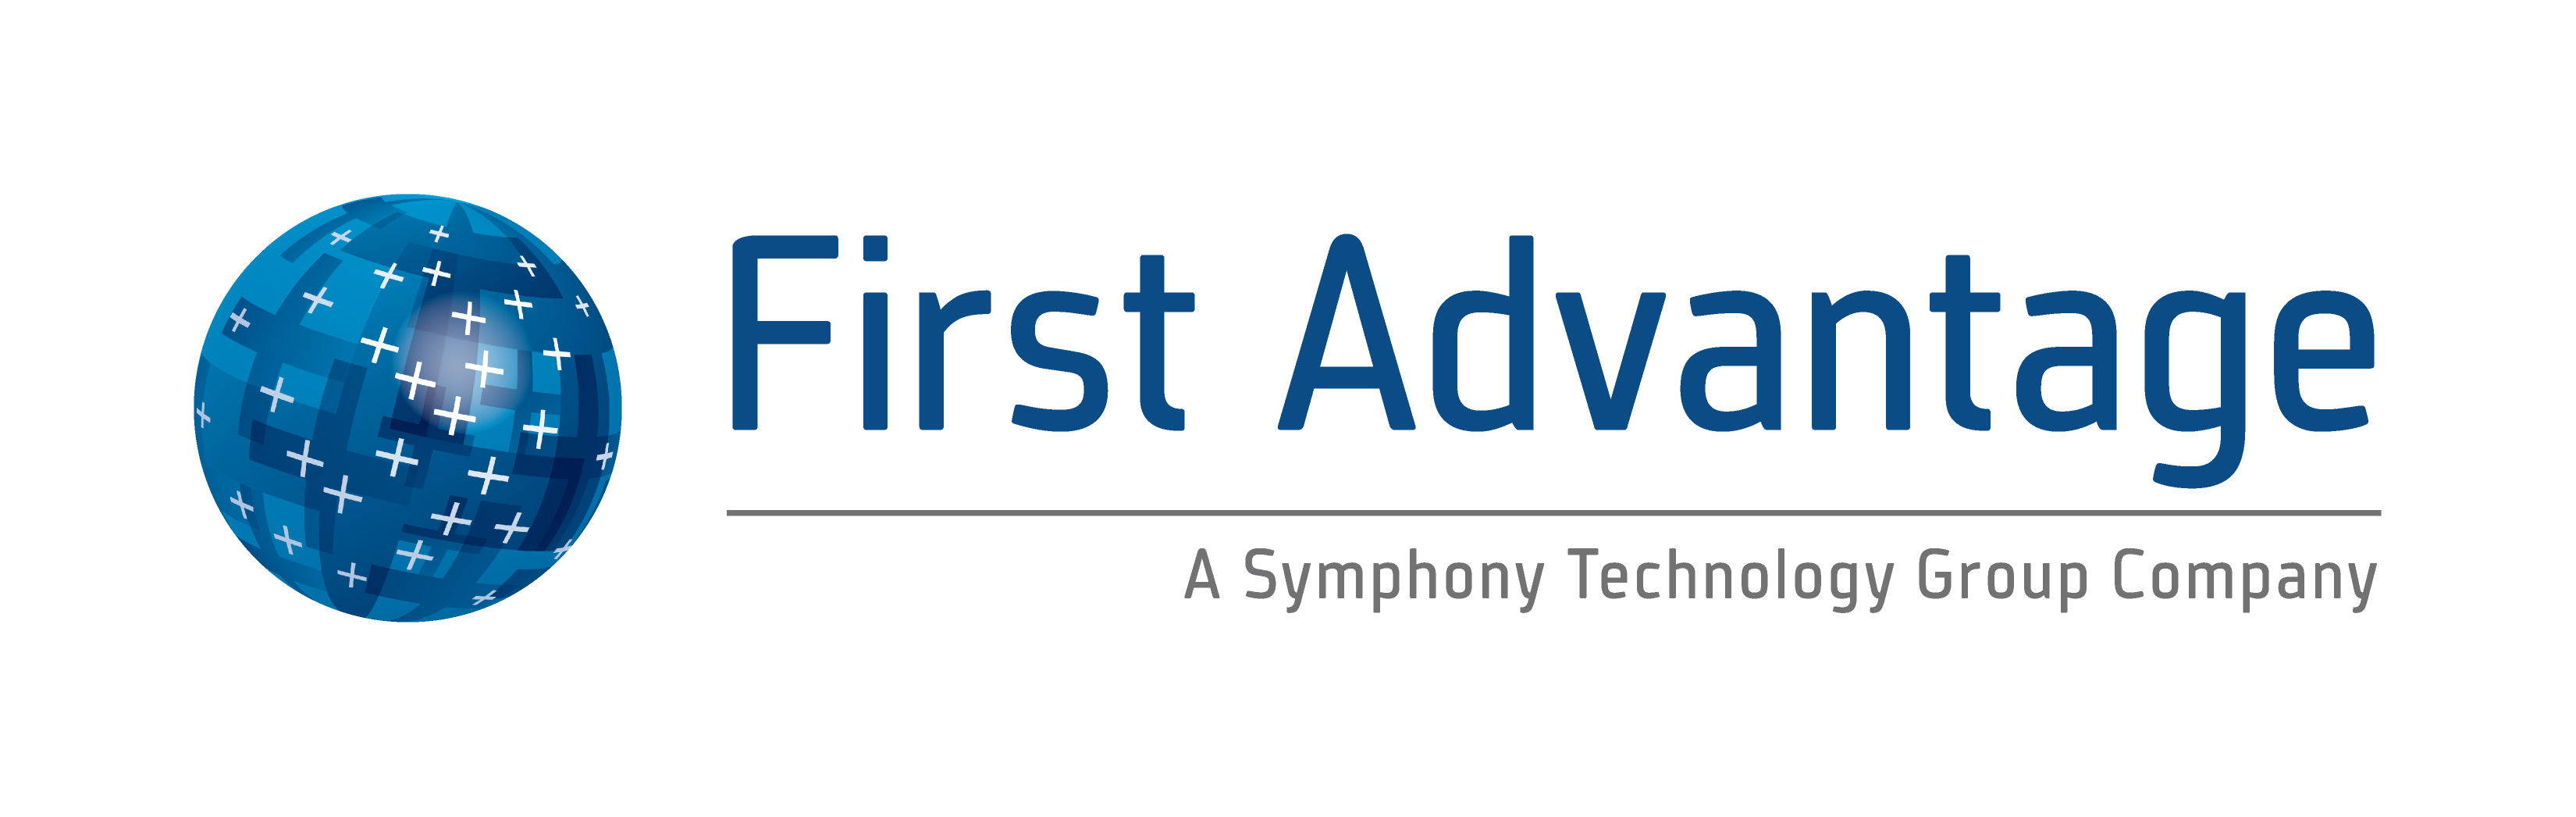 First Advantage_Logo_4c